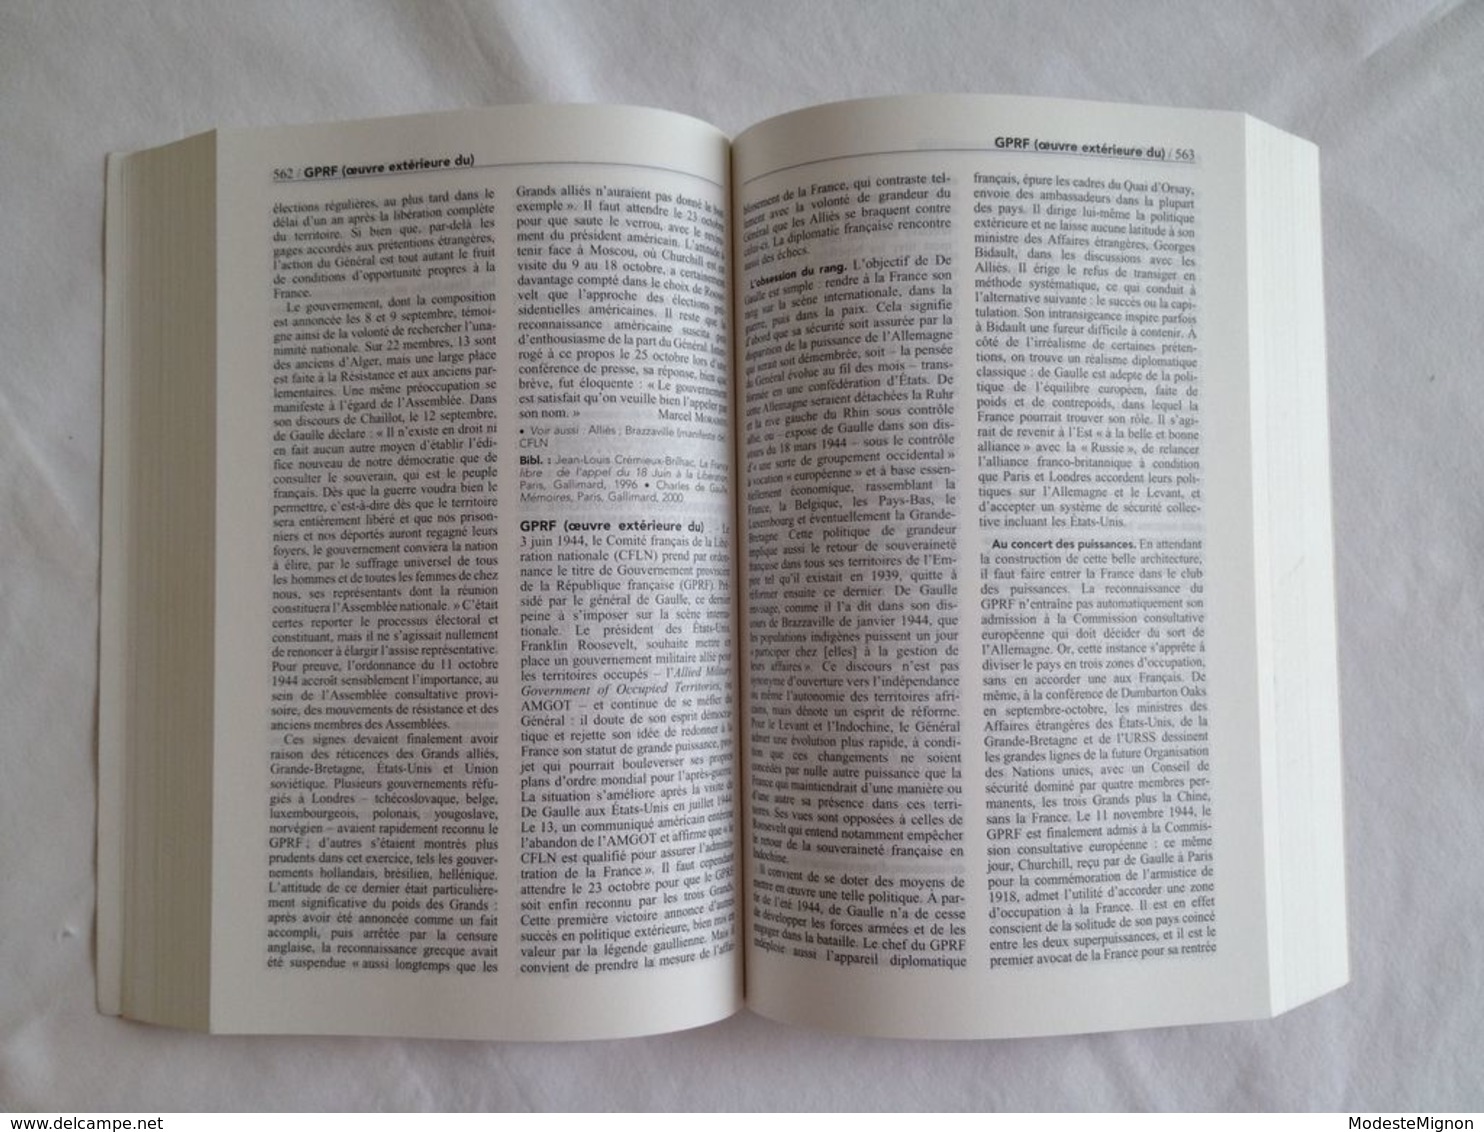 Dictionnaire de Gaulle. Editions Robert Laffont / Collection Bouquins. 2006